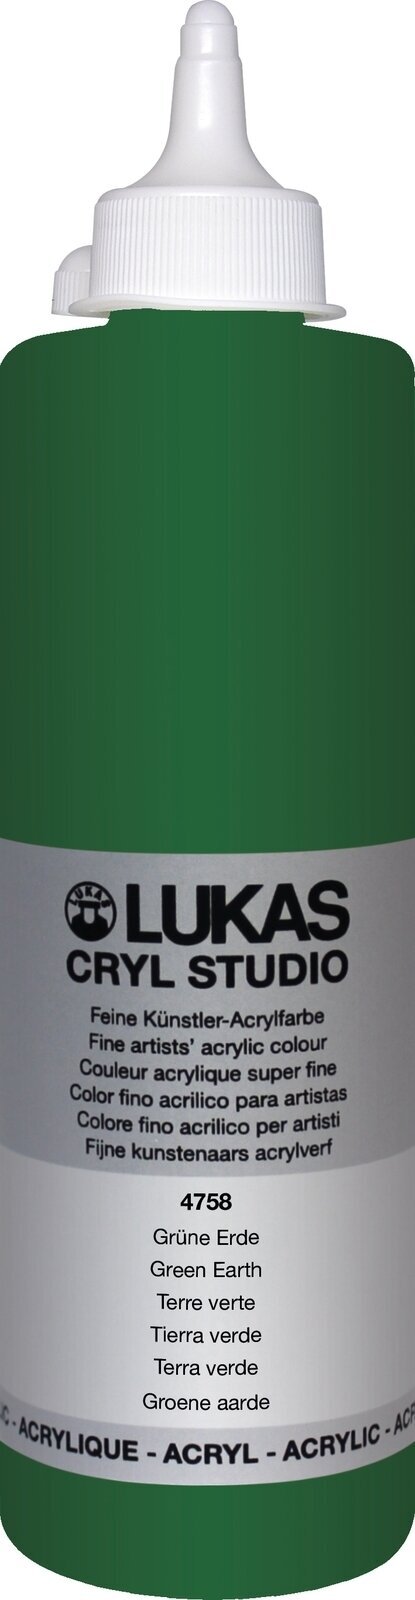 Peinture acrylique Lukas Cryl Studio Acrylic Paint Plastic Bottle Peinture acrylique Green Earth 500 ml 1 pc